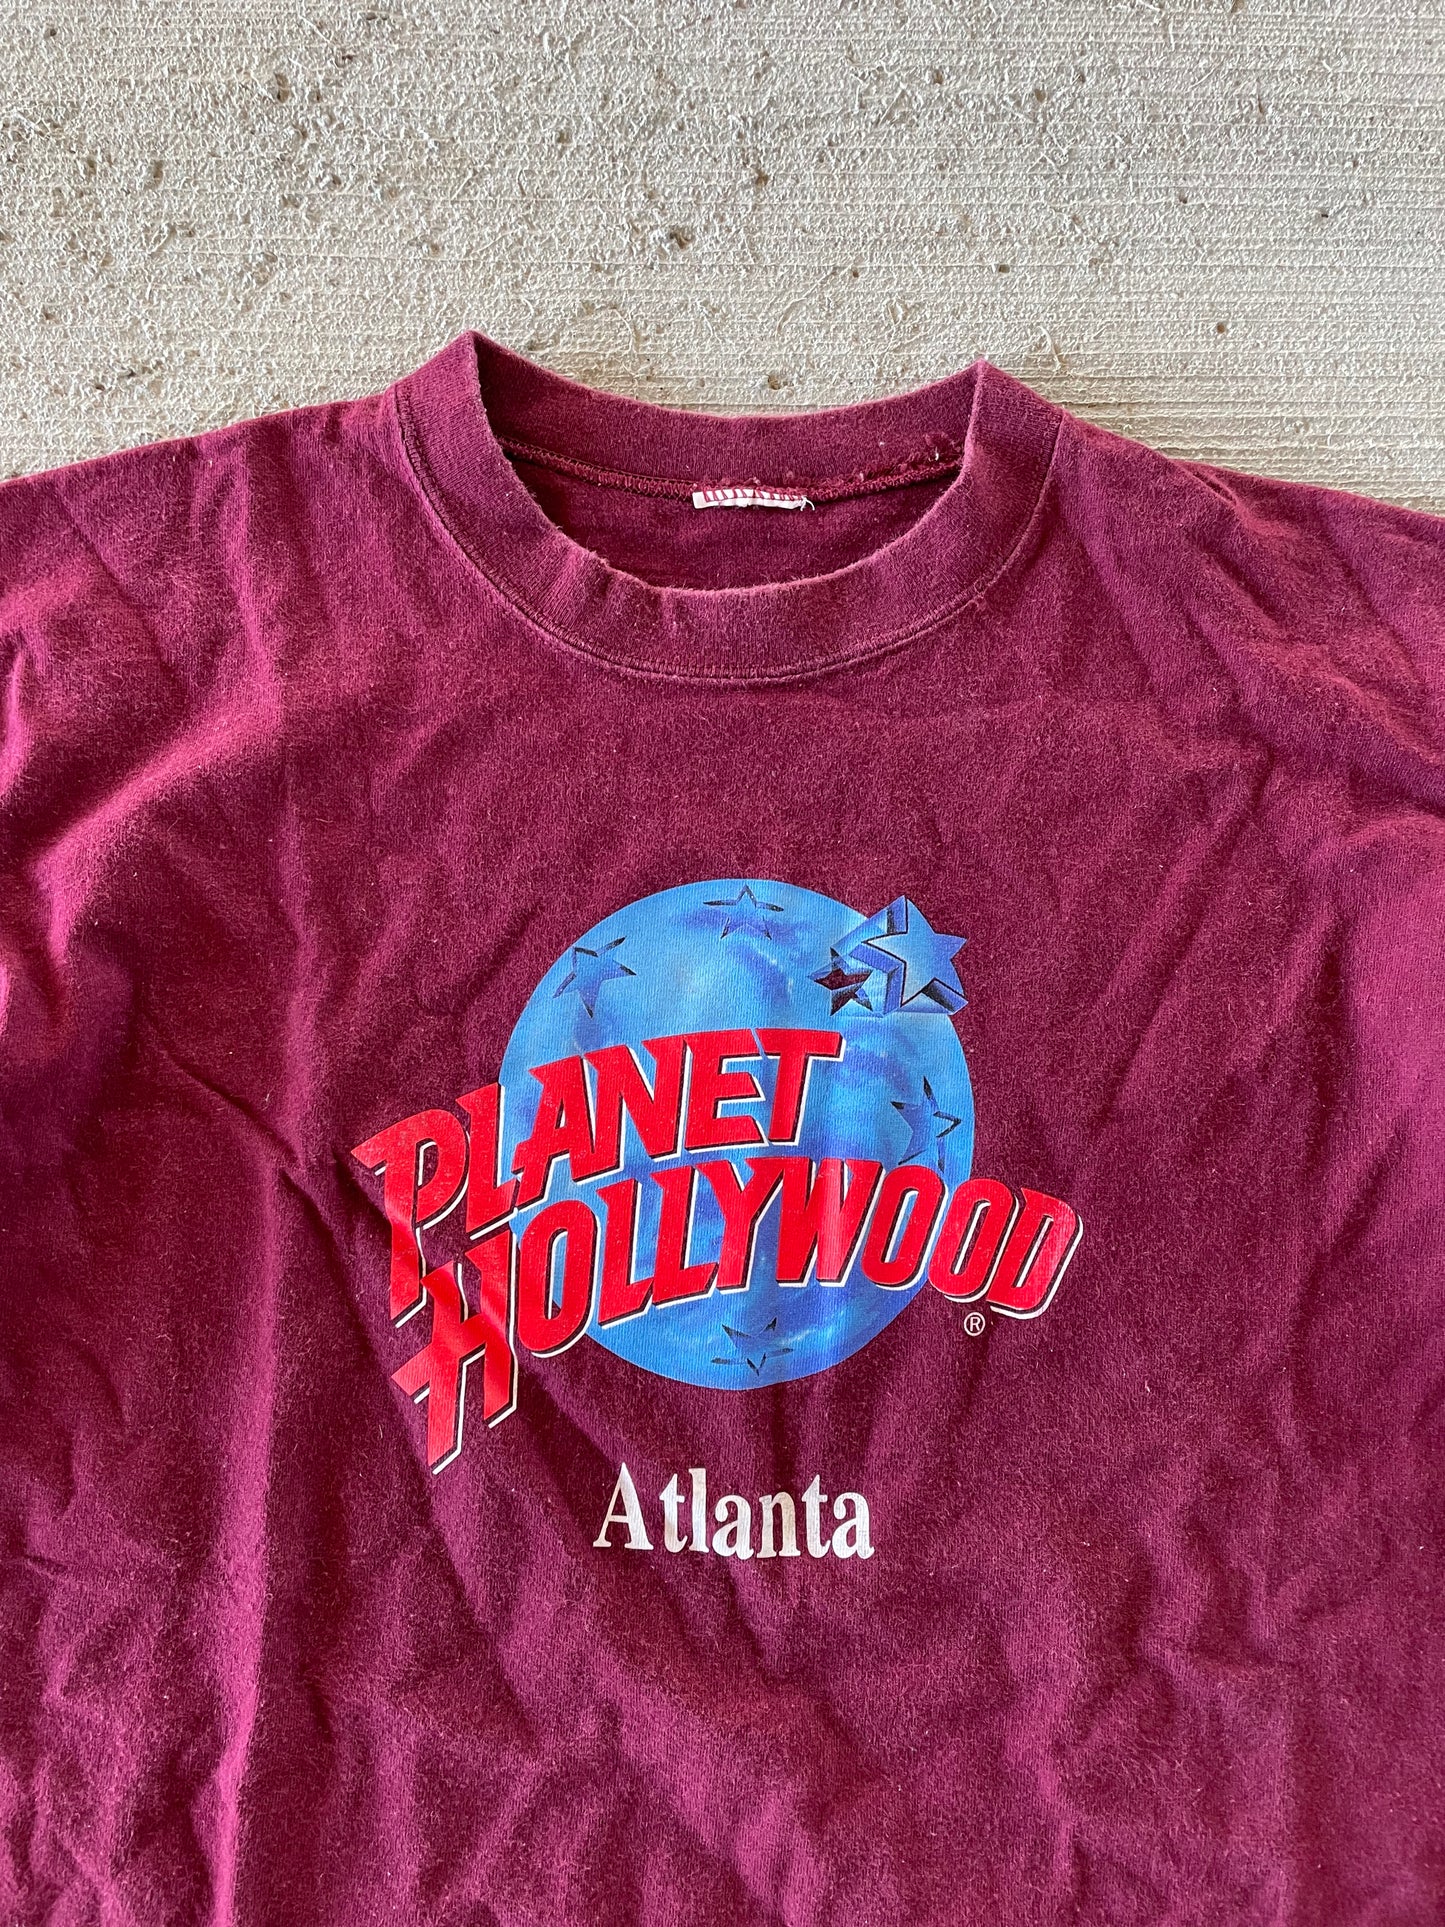 90s Planet Hollywood Atlanta tee